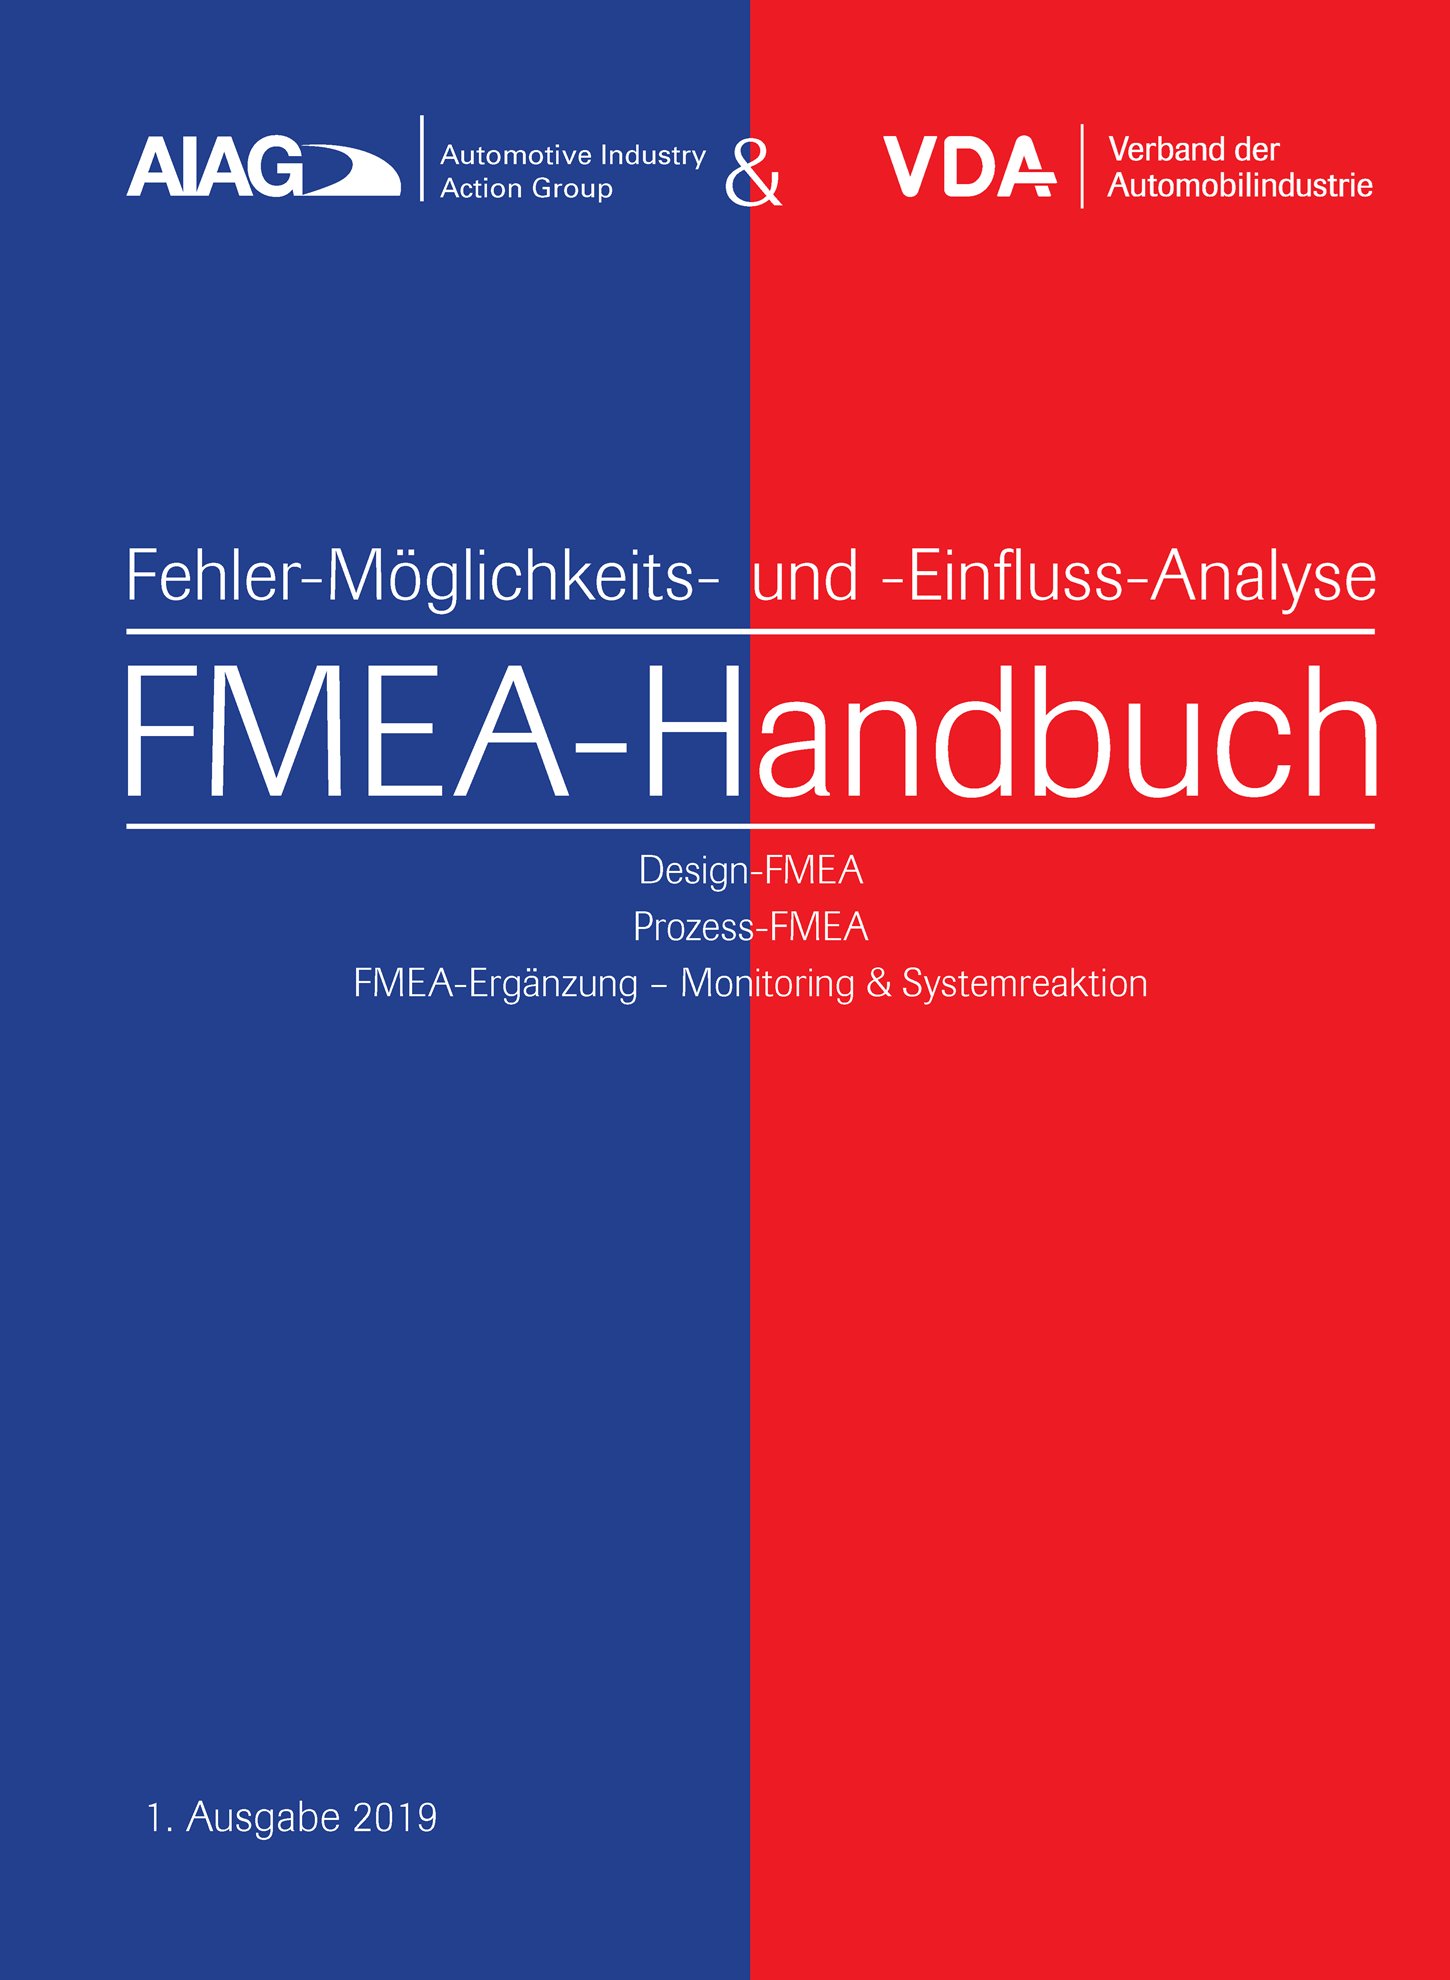 Publikation  VDA AIAG & VDA FMEA-Handbuch
 Design-FMEA, Prozess-FMEA, 
 FMEA-Ergänzung - Monitoring & Systemreaktion
 1. Ausgabe 2019 1.1.2019 Ansicht